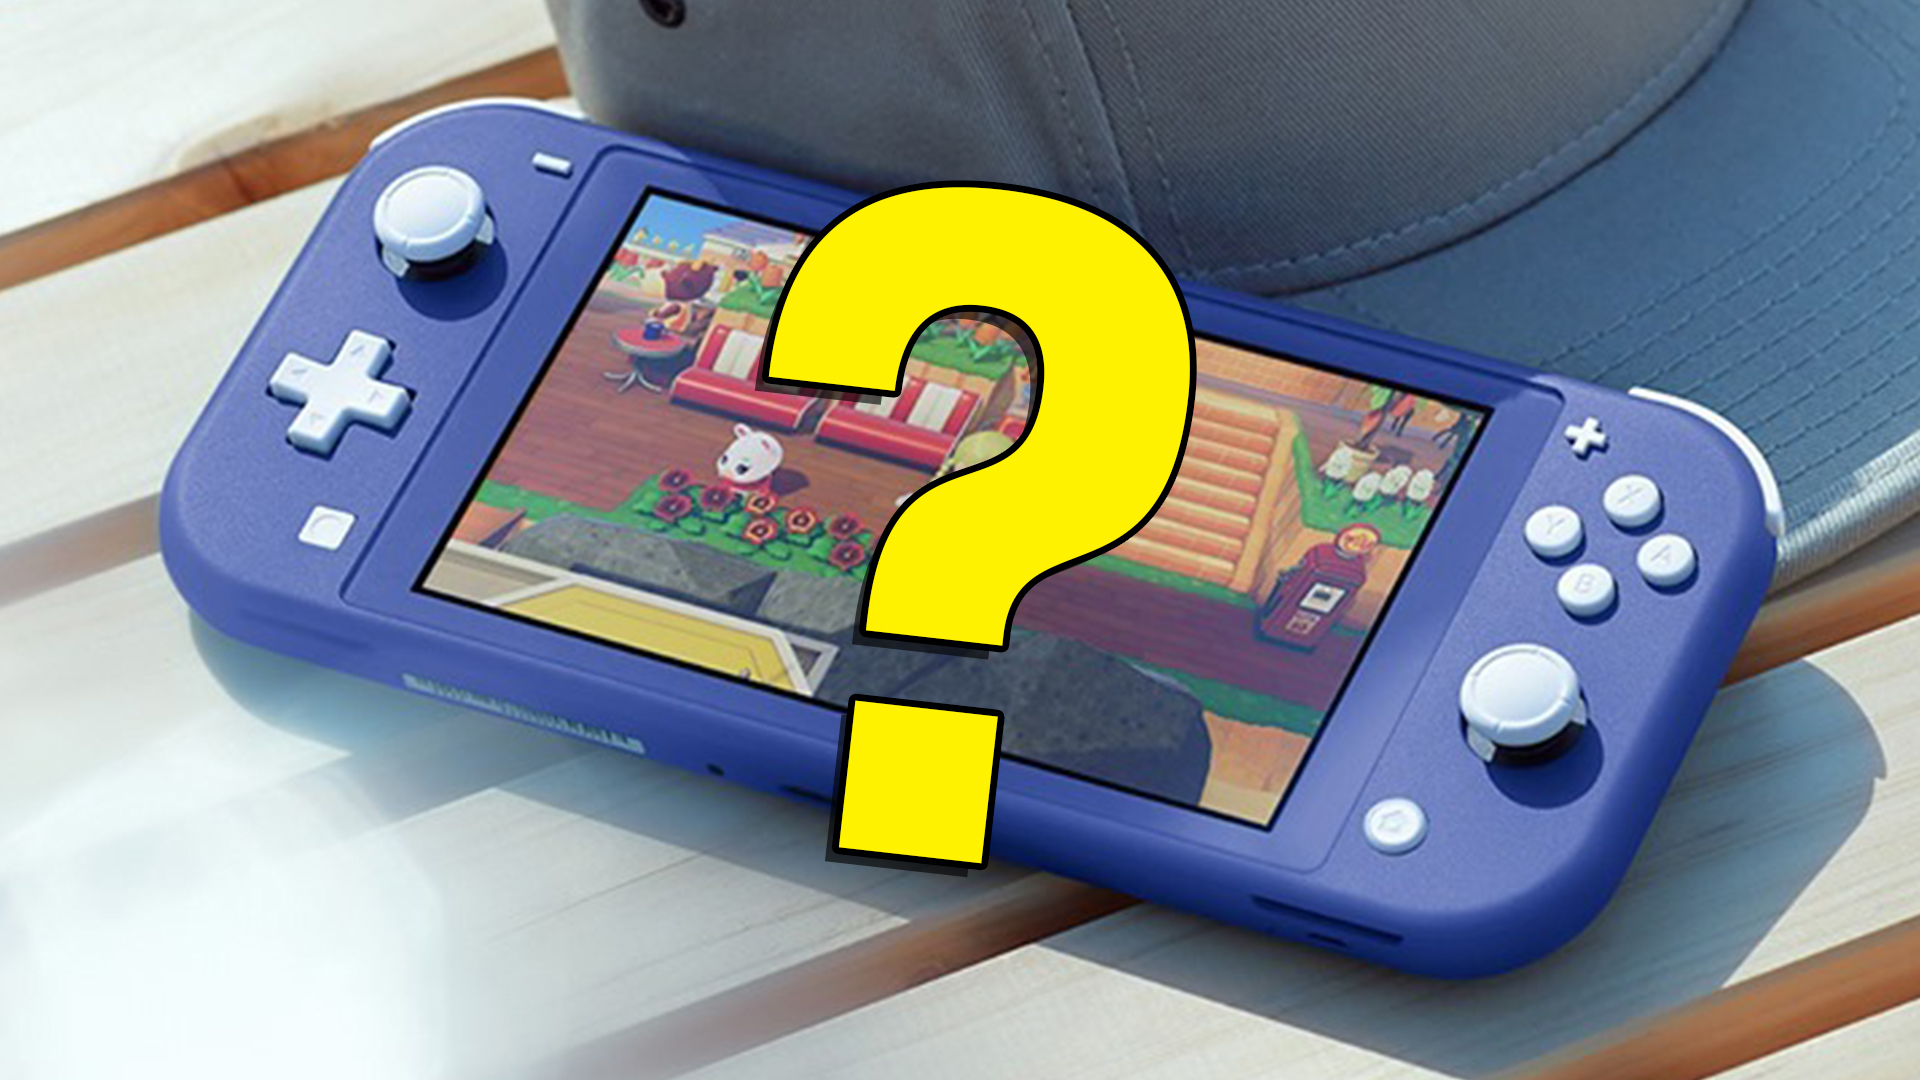 A blue Nintendo Switch